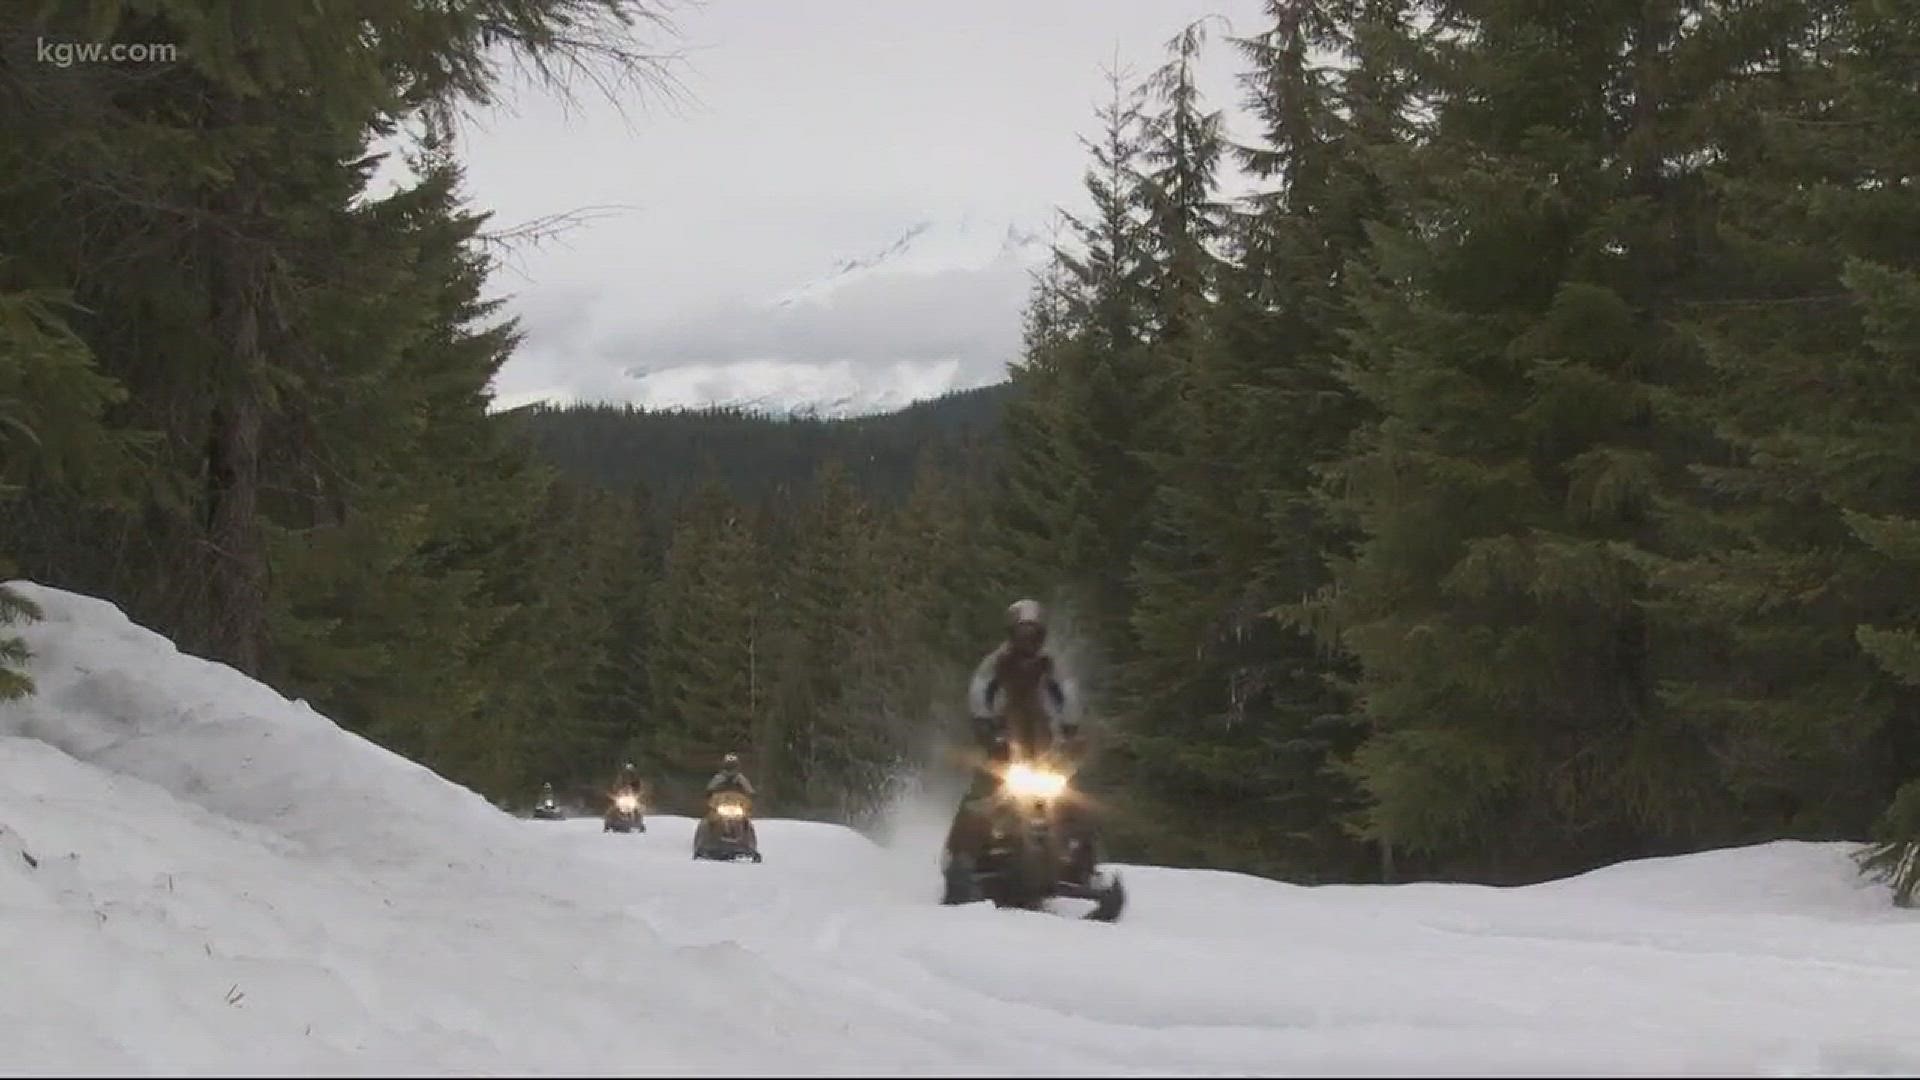 Grant's Getaways: Mount Hood snowmobile tours